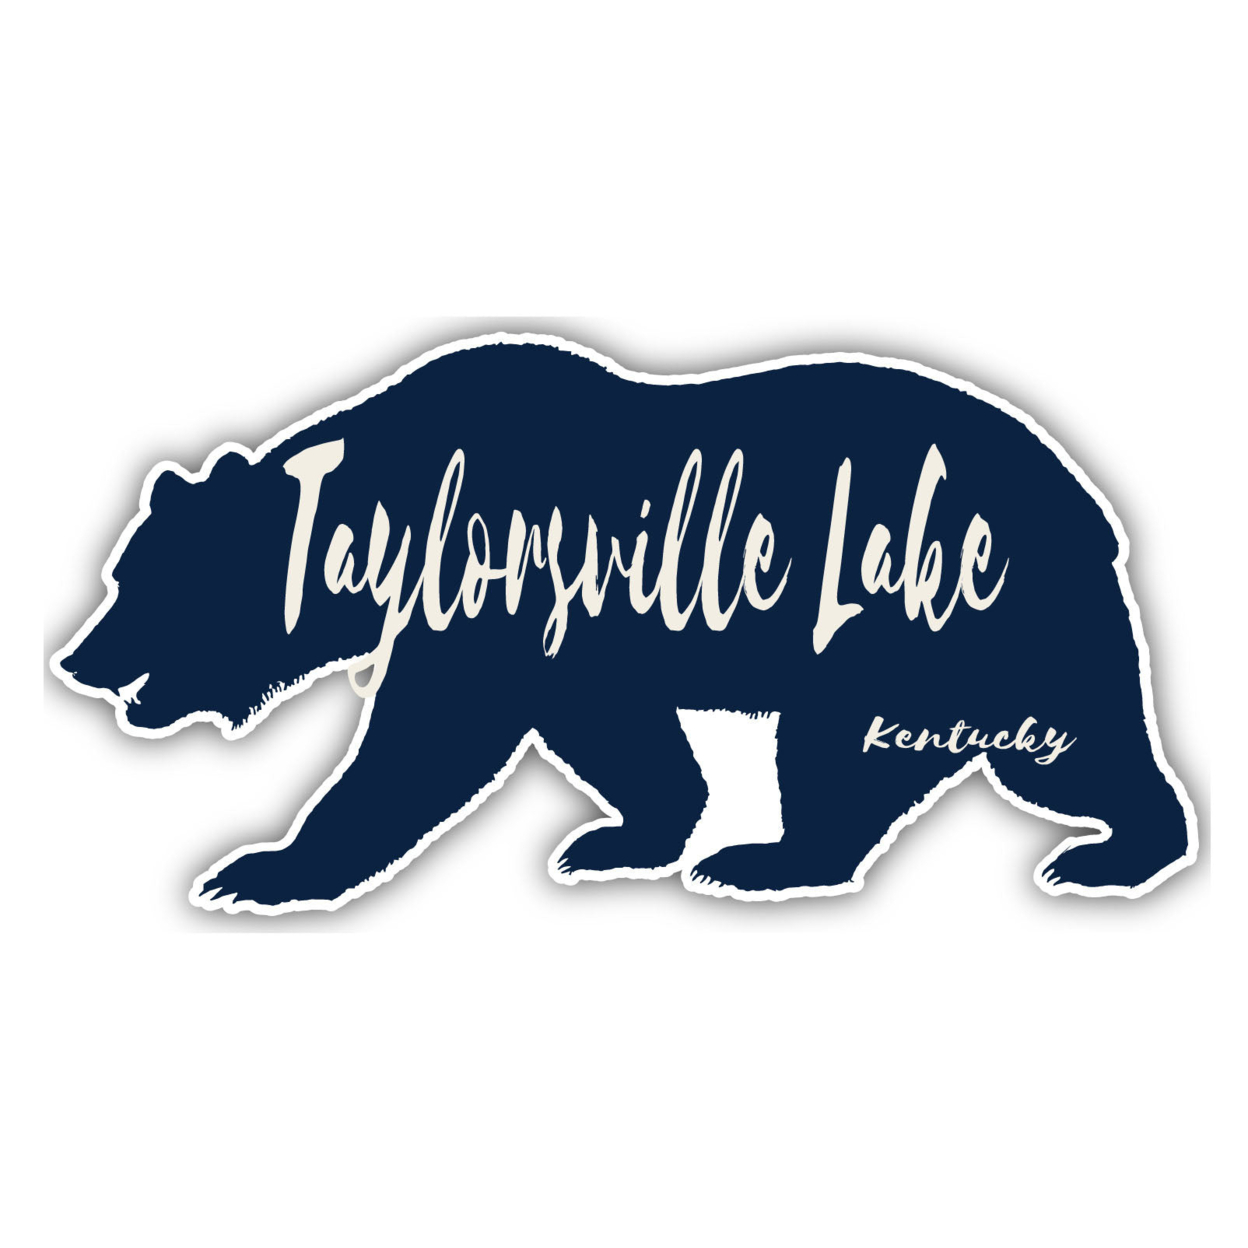 Taylorsville Lake Kentucky Souvenir Decorative Stickers (Choose Theme And Size) - Single Unit, 4-Inch, Bear